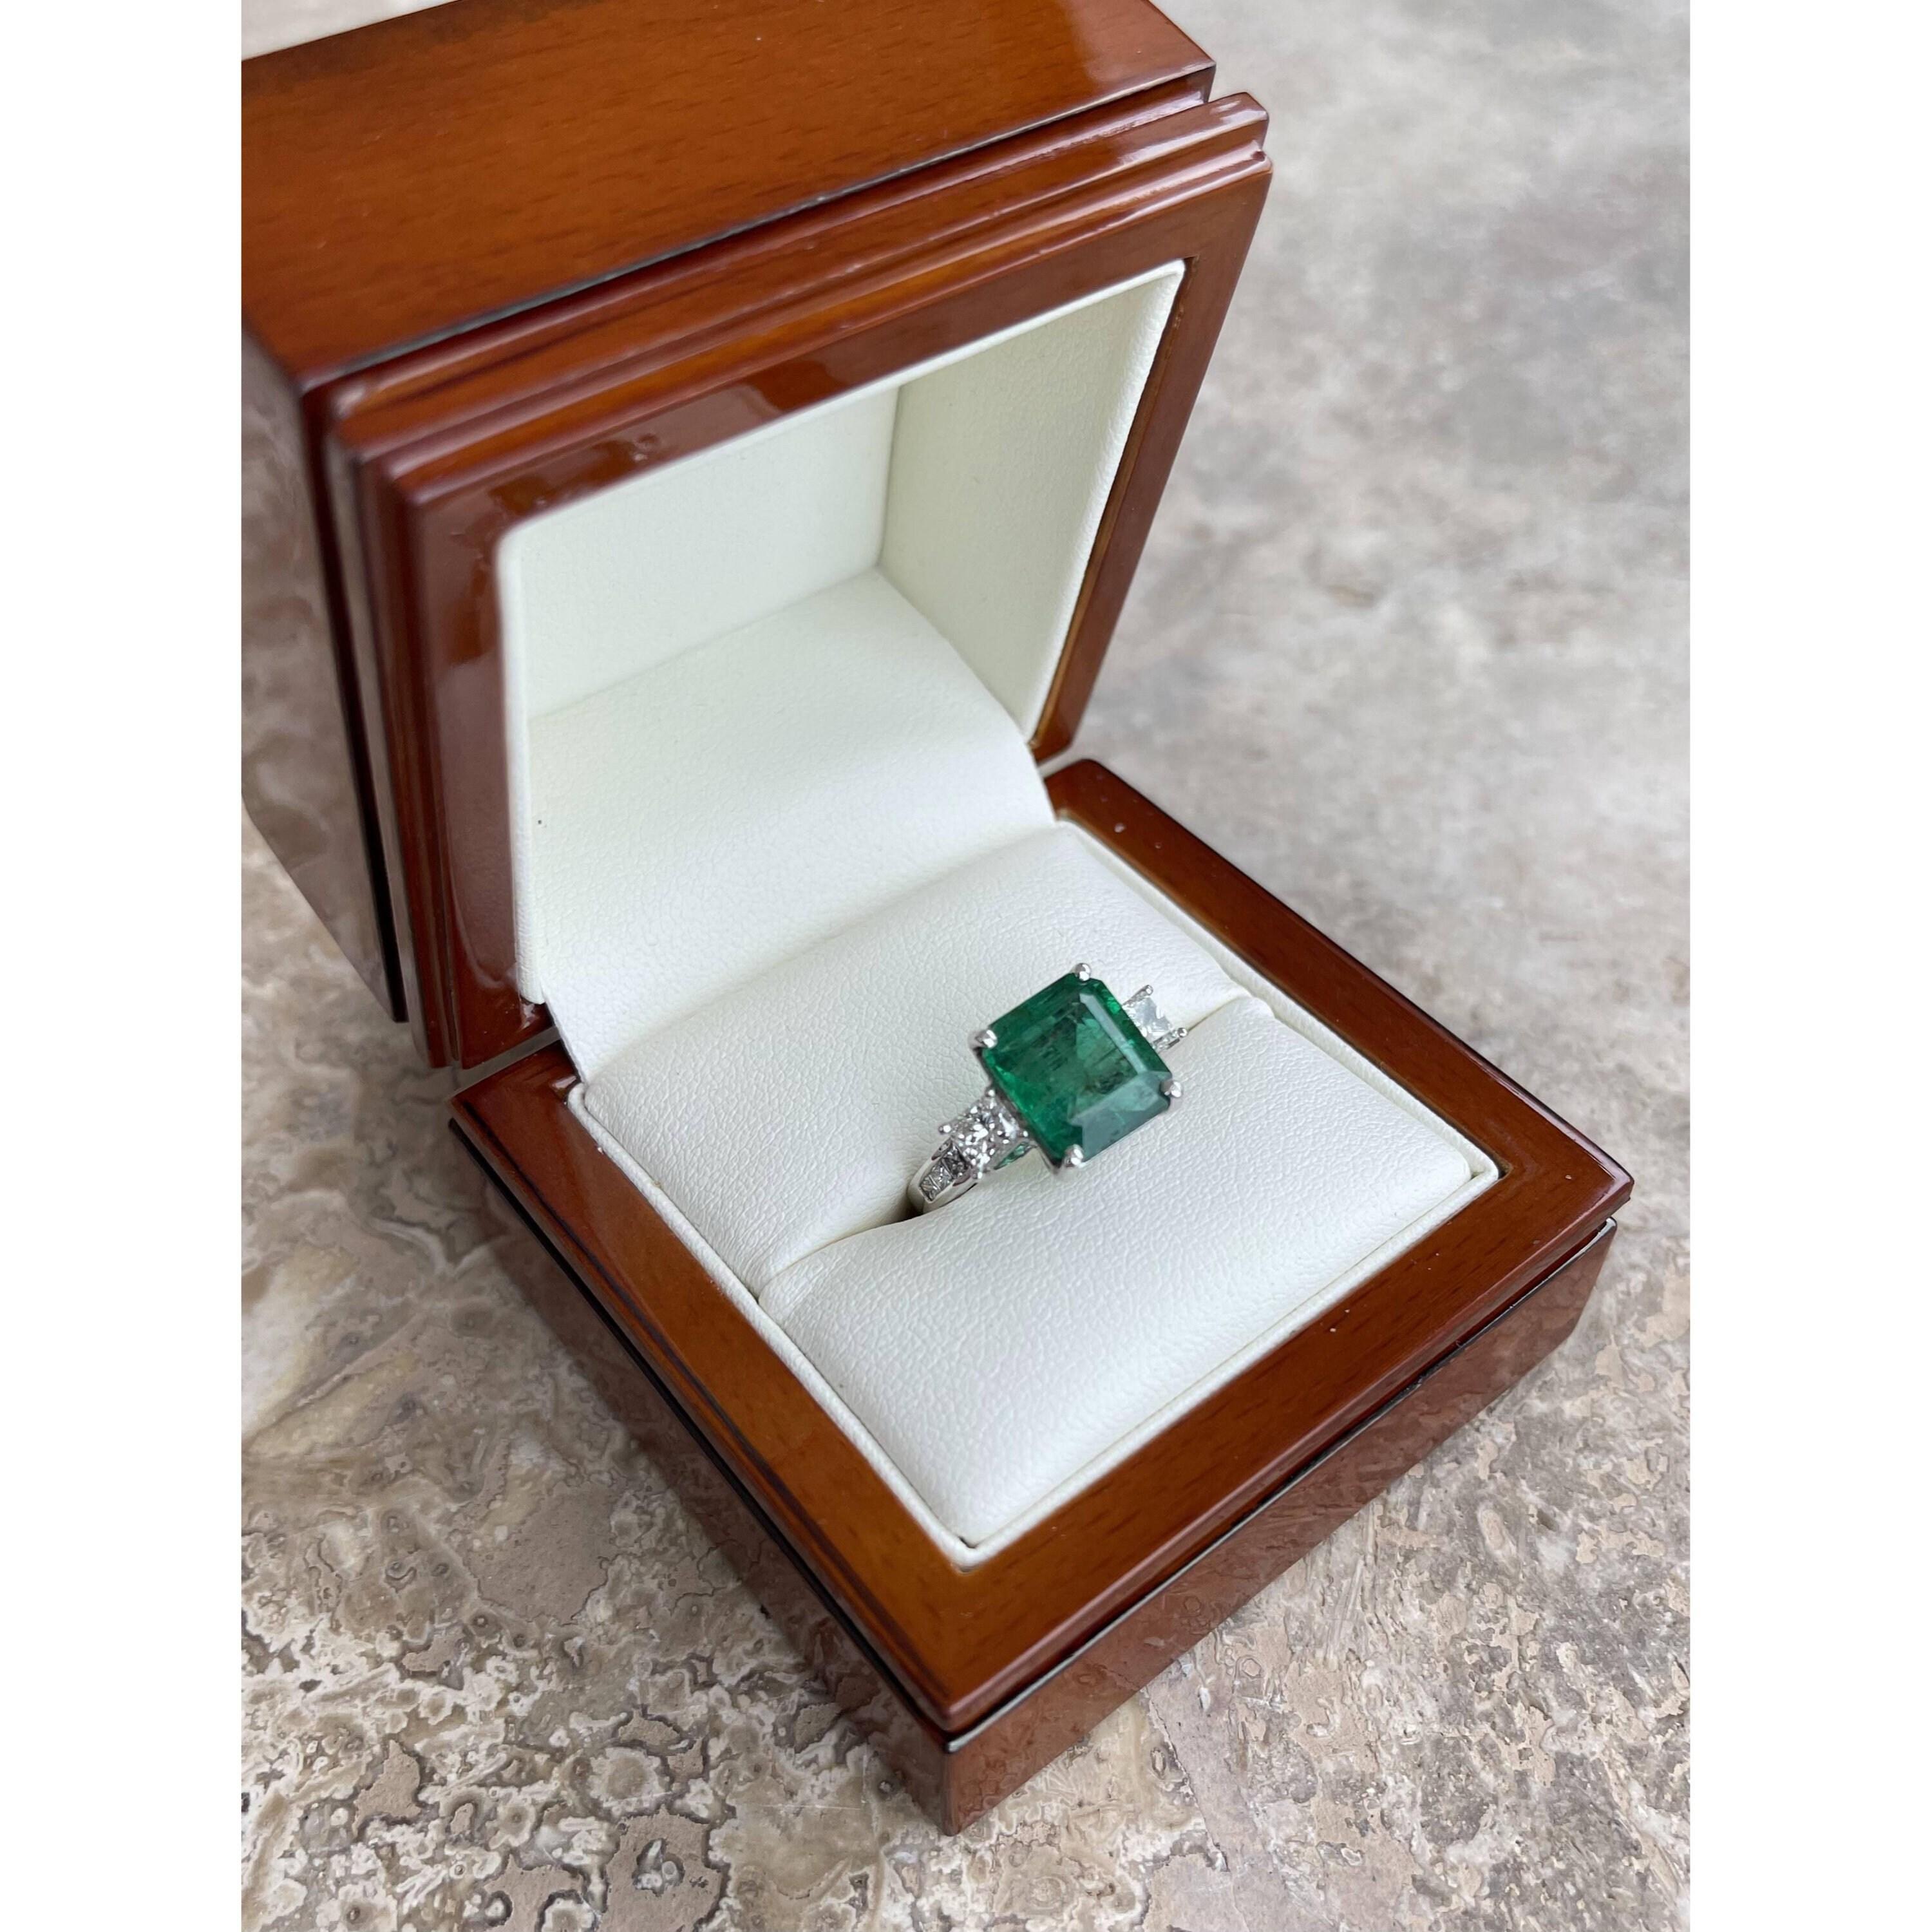 For Sale:  4 Carat Emerald Cut Emerald Diamond Engagement Ring, Halo Diamond 18K Gold Ring 3